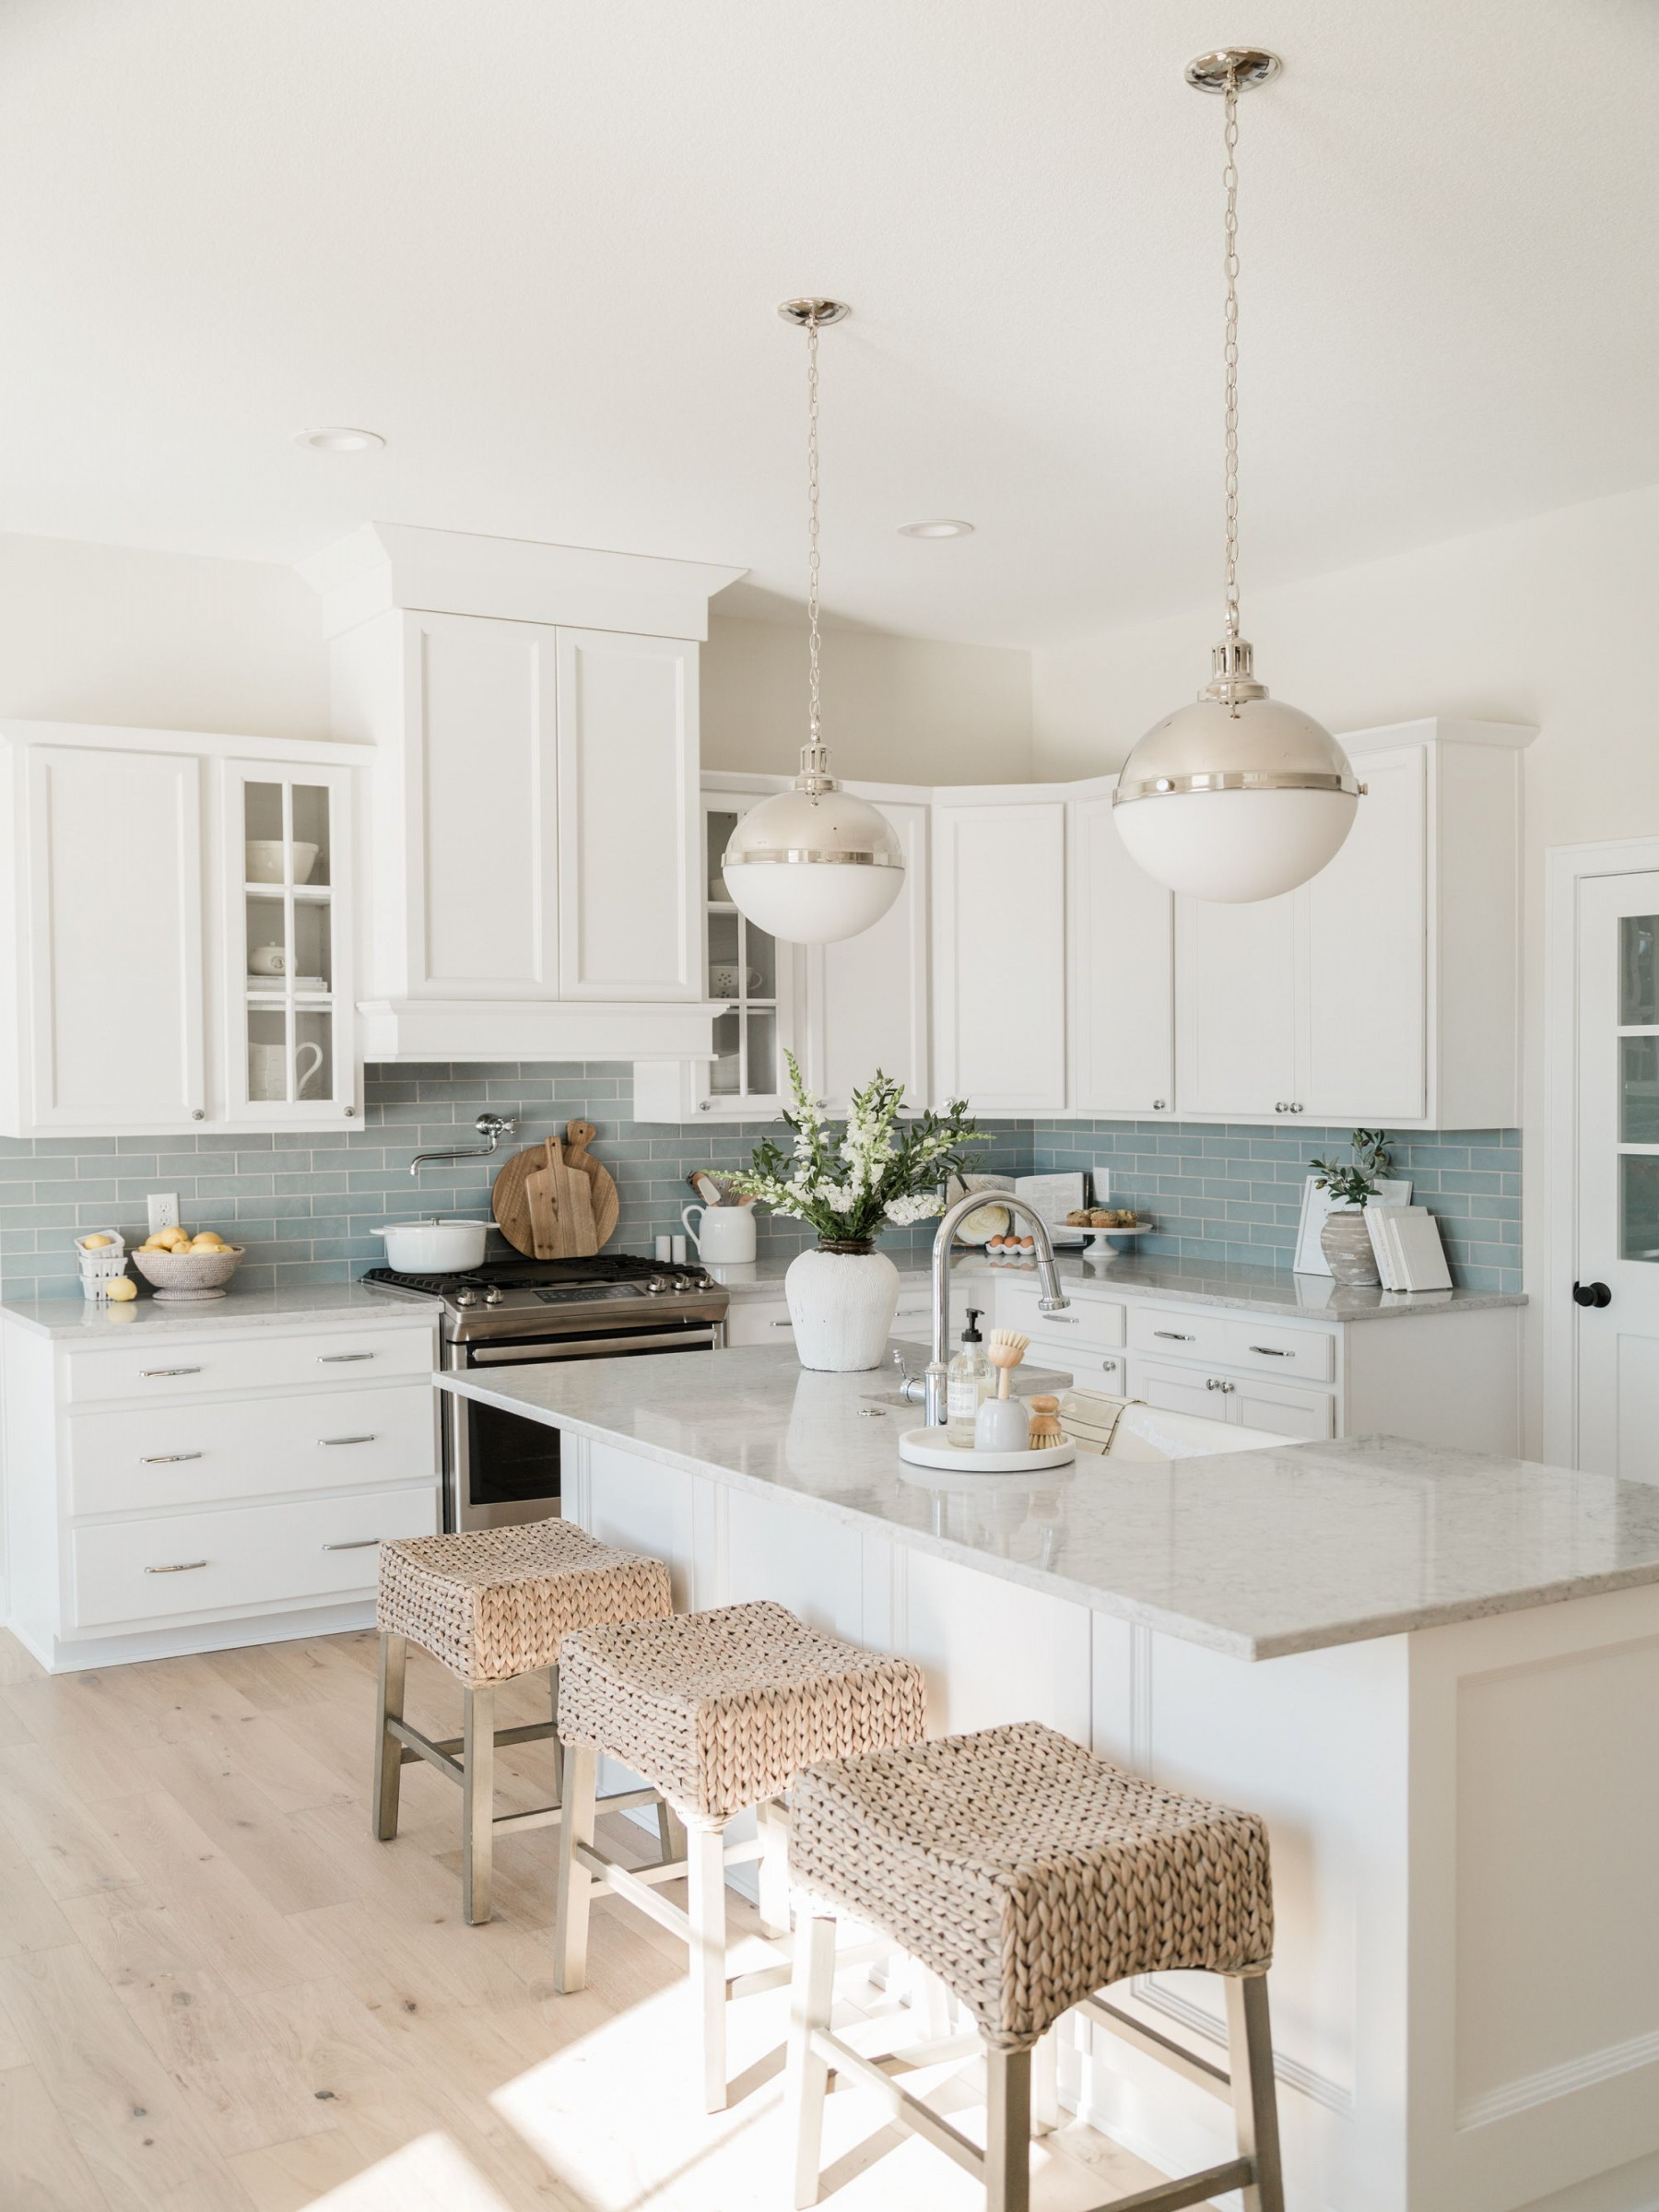 Coastal kitchen with blue backsplash  Home kitchens, Home decor